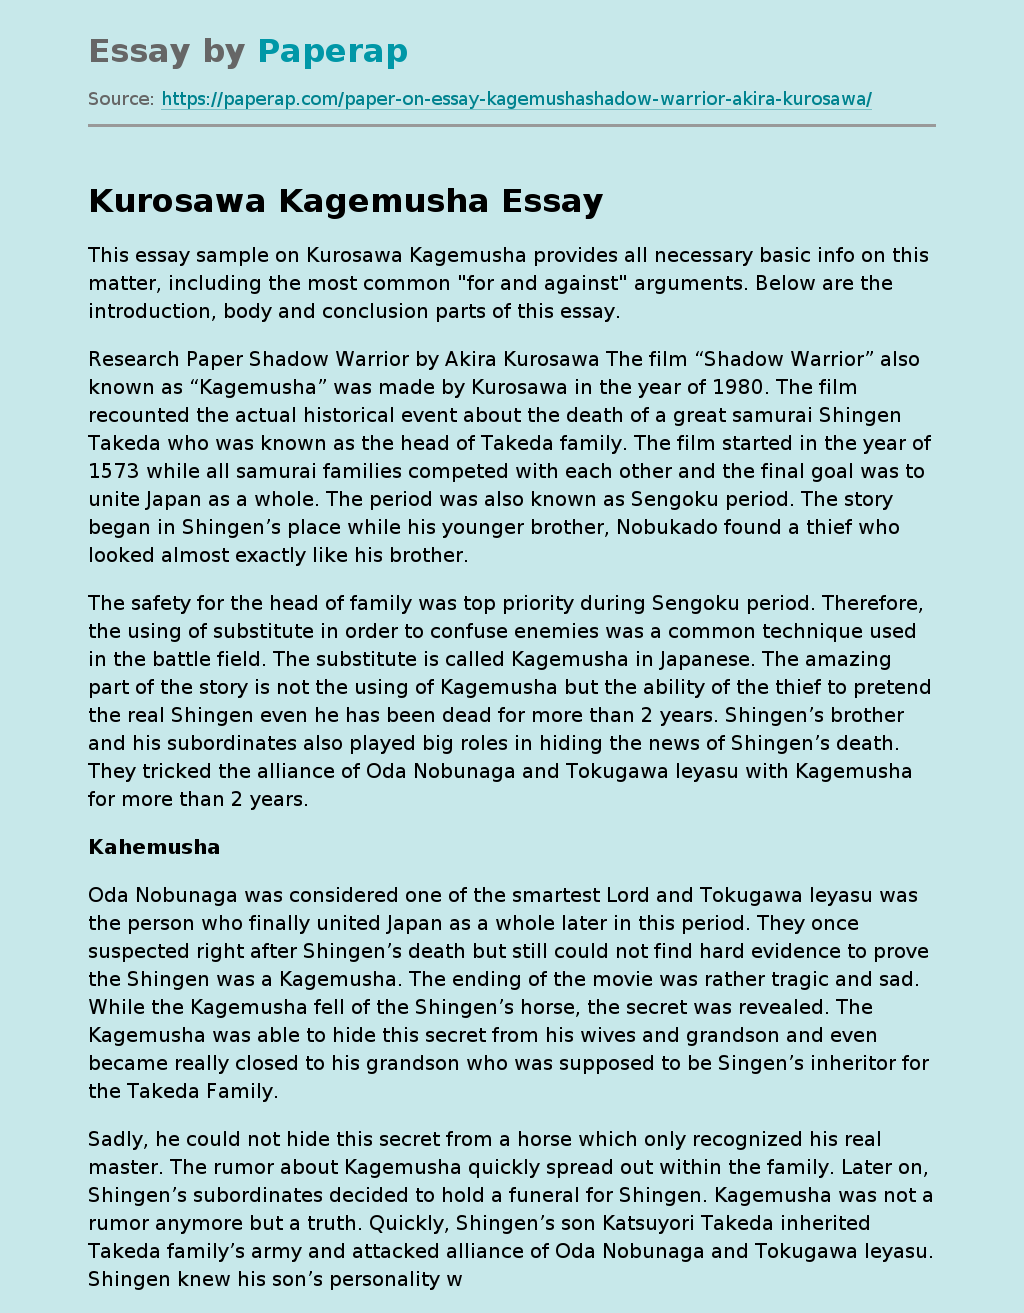 The Film Shadow Warrior by Kurosawa Kagemusha